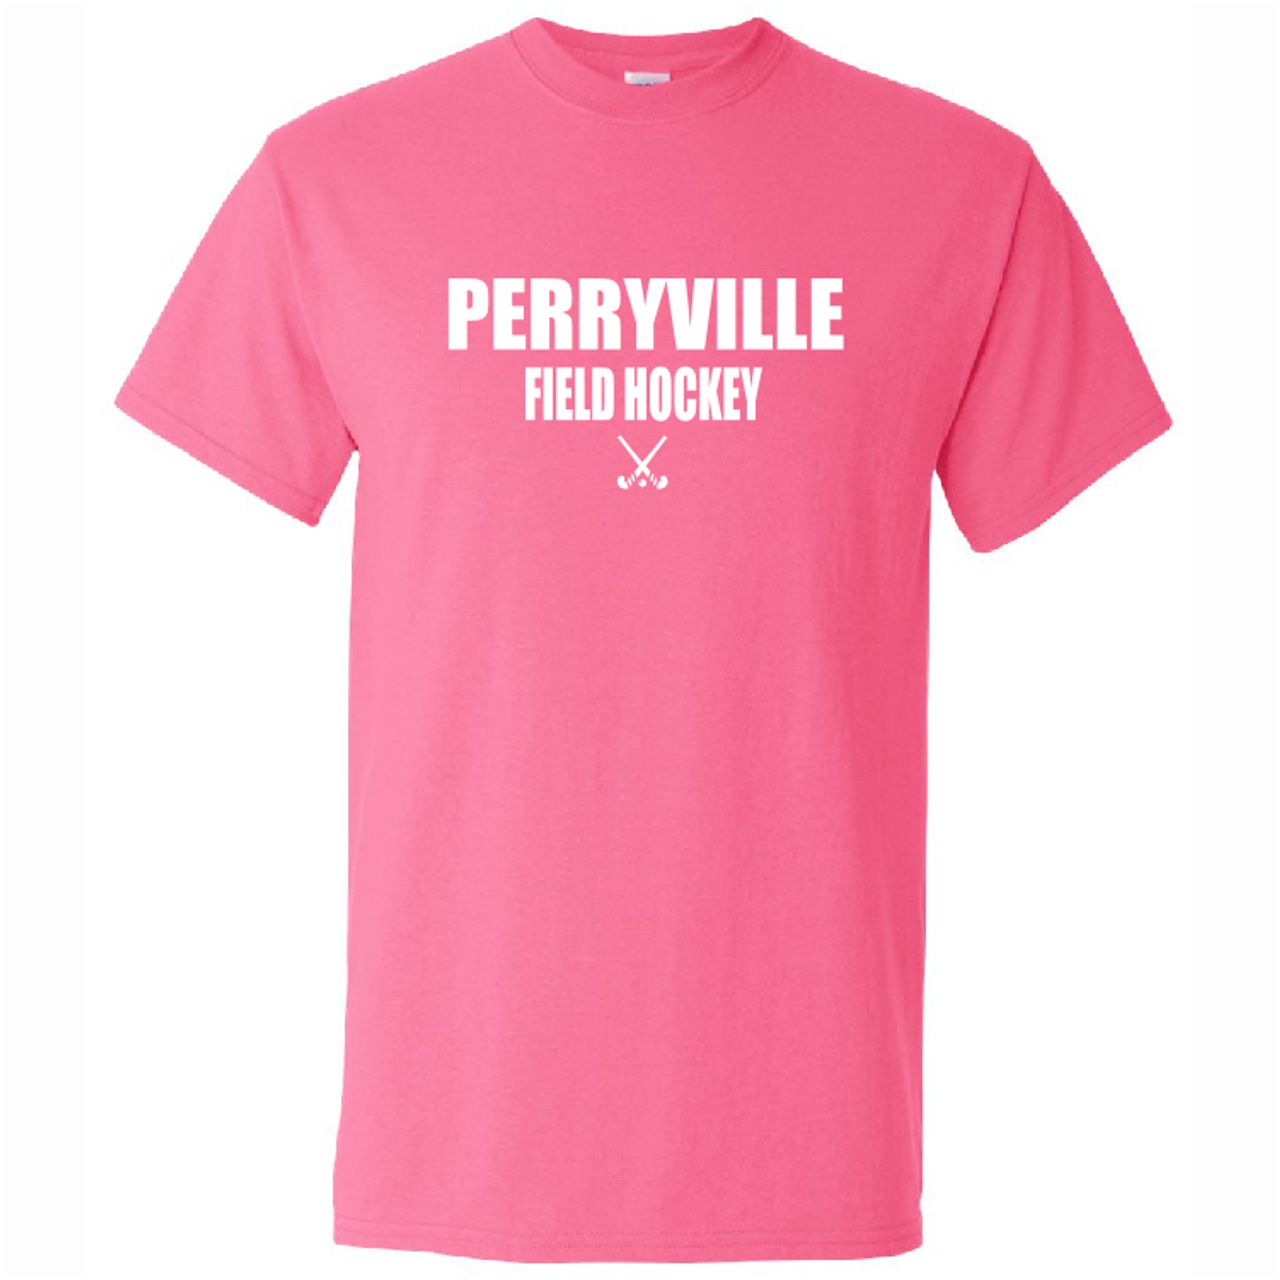 Perryville Field Hockey Cotton Tee, Pink